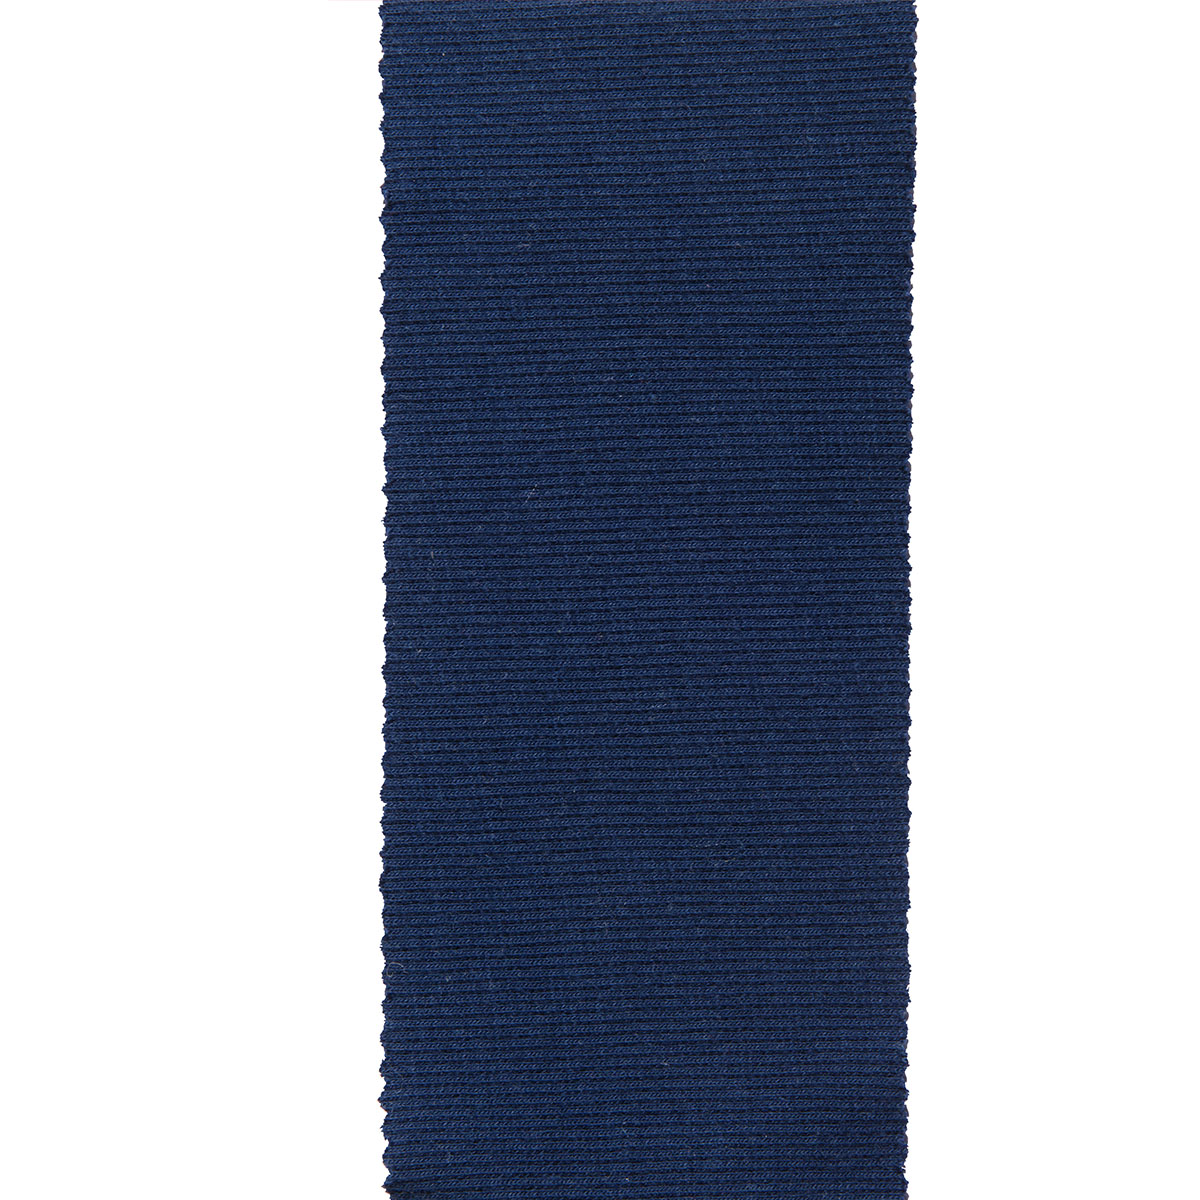 Dekostoff Gisele dunkelblau in 40cm Breite (METERWARE) Baumwollstoff Stoff aus 97% Baumwolle